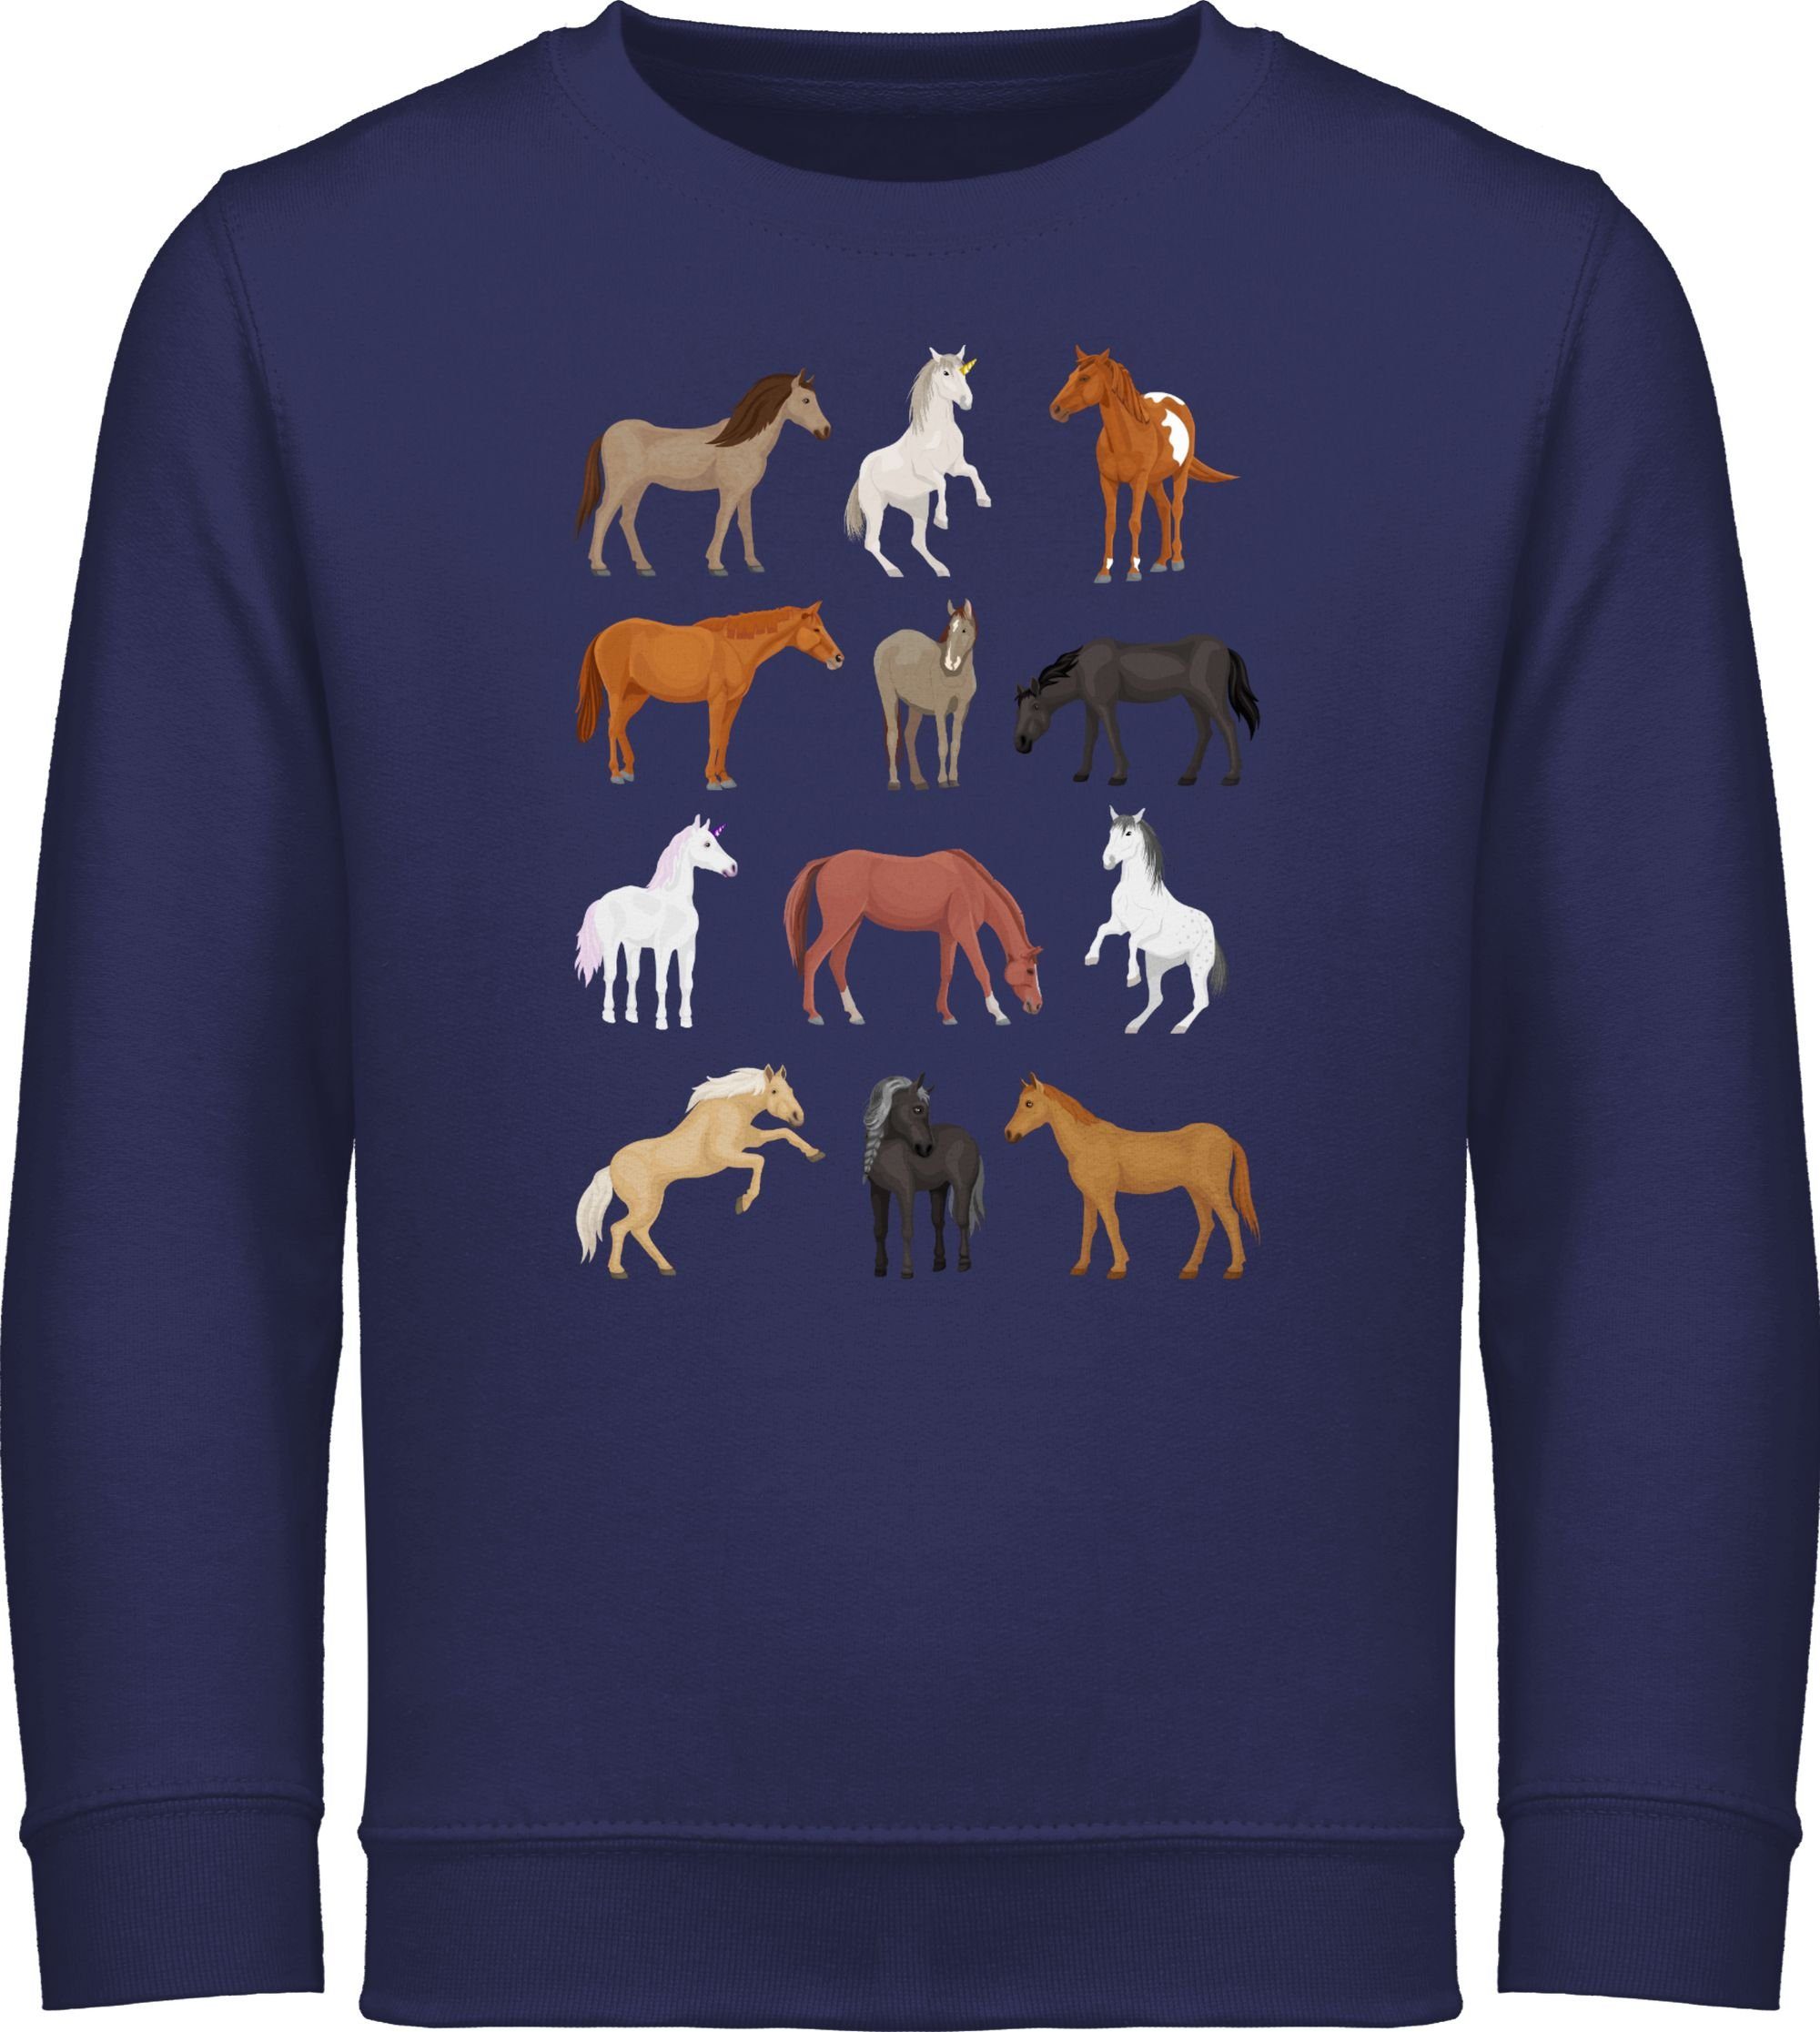 Shirtracer Sweatshirt Pferde Reihe Tiermotiv Animal Print 1 Navy Blau